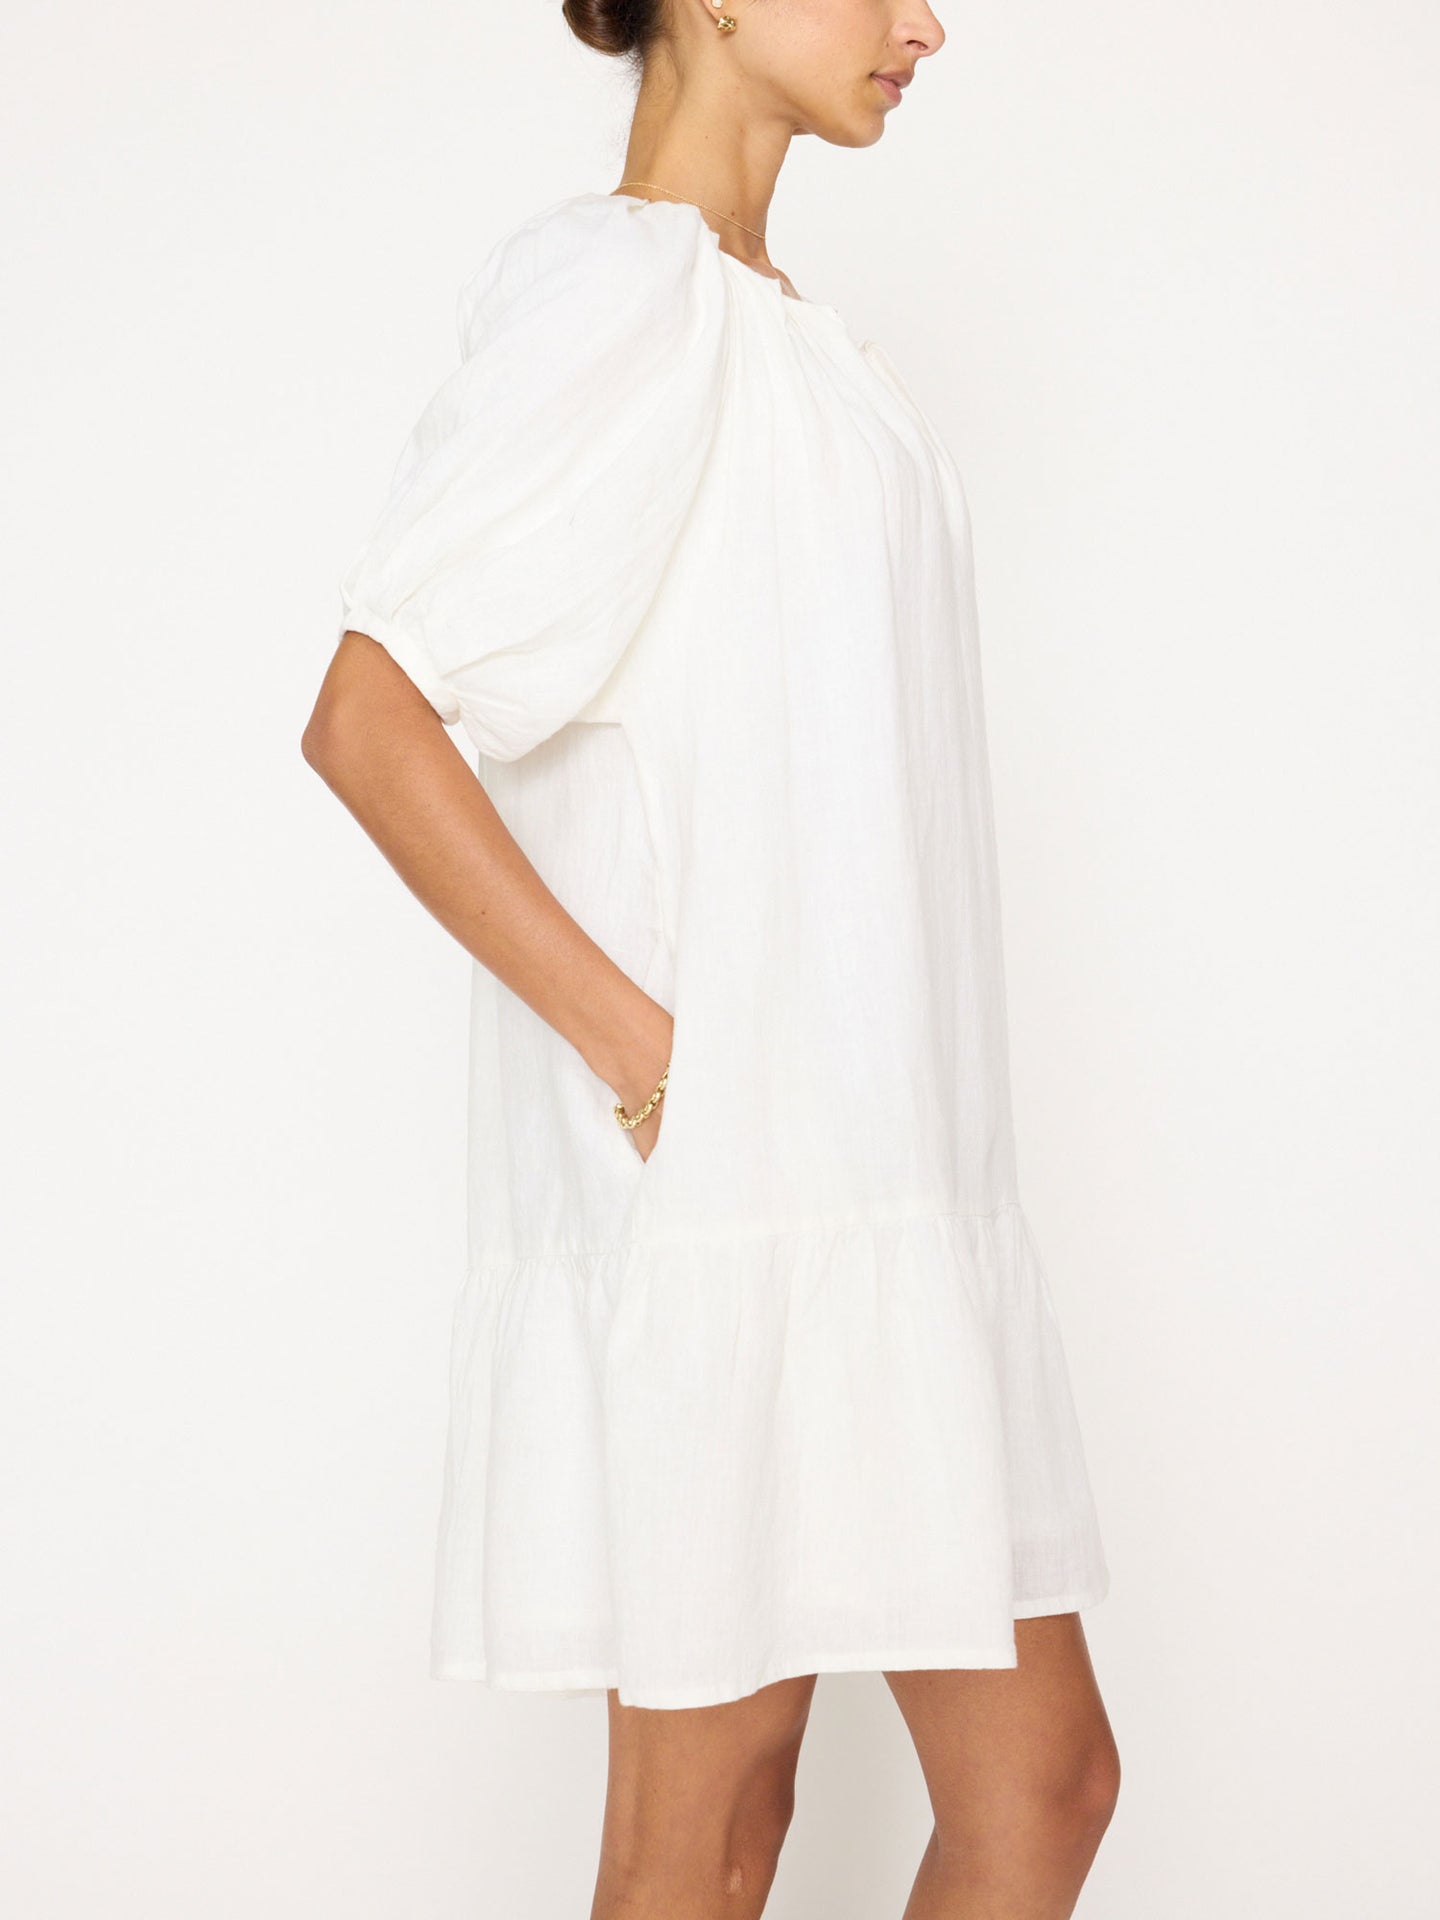 The Bree Dress - Pearl White